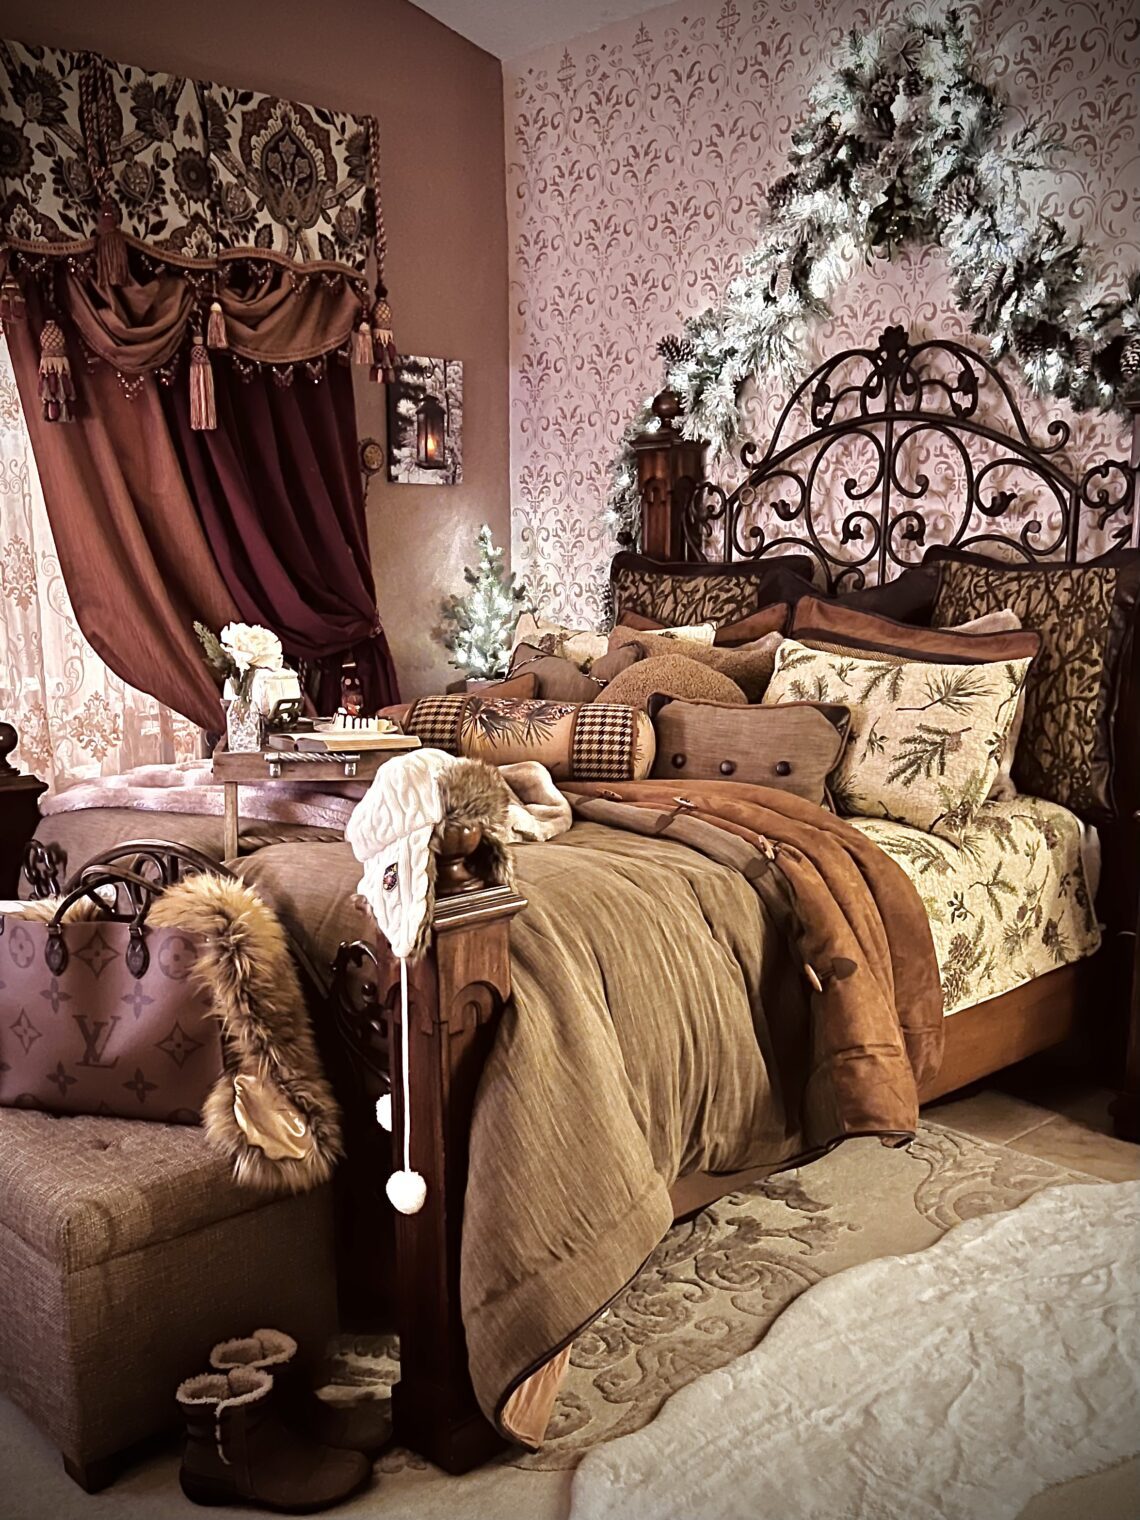 winter Christmas home décor bedding pine trees garland faux fur throw blankets winter wonderland bedroom louis vuiton